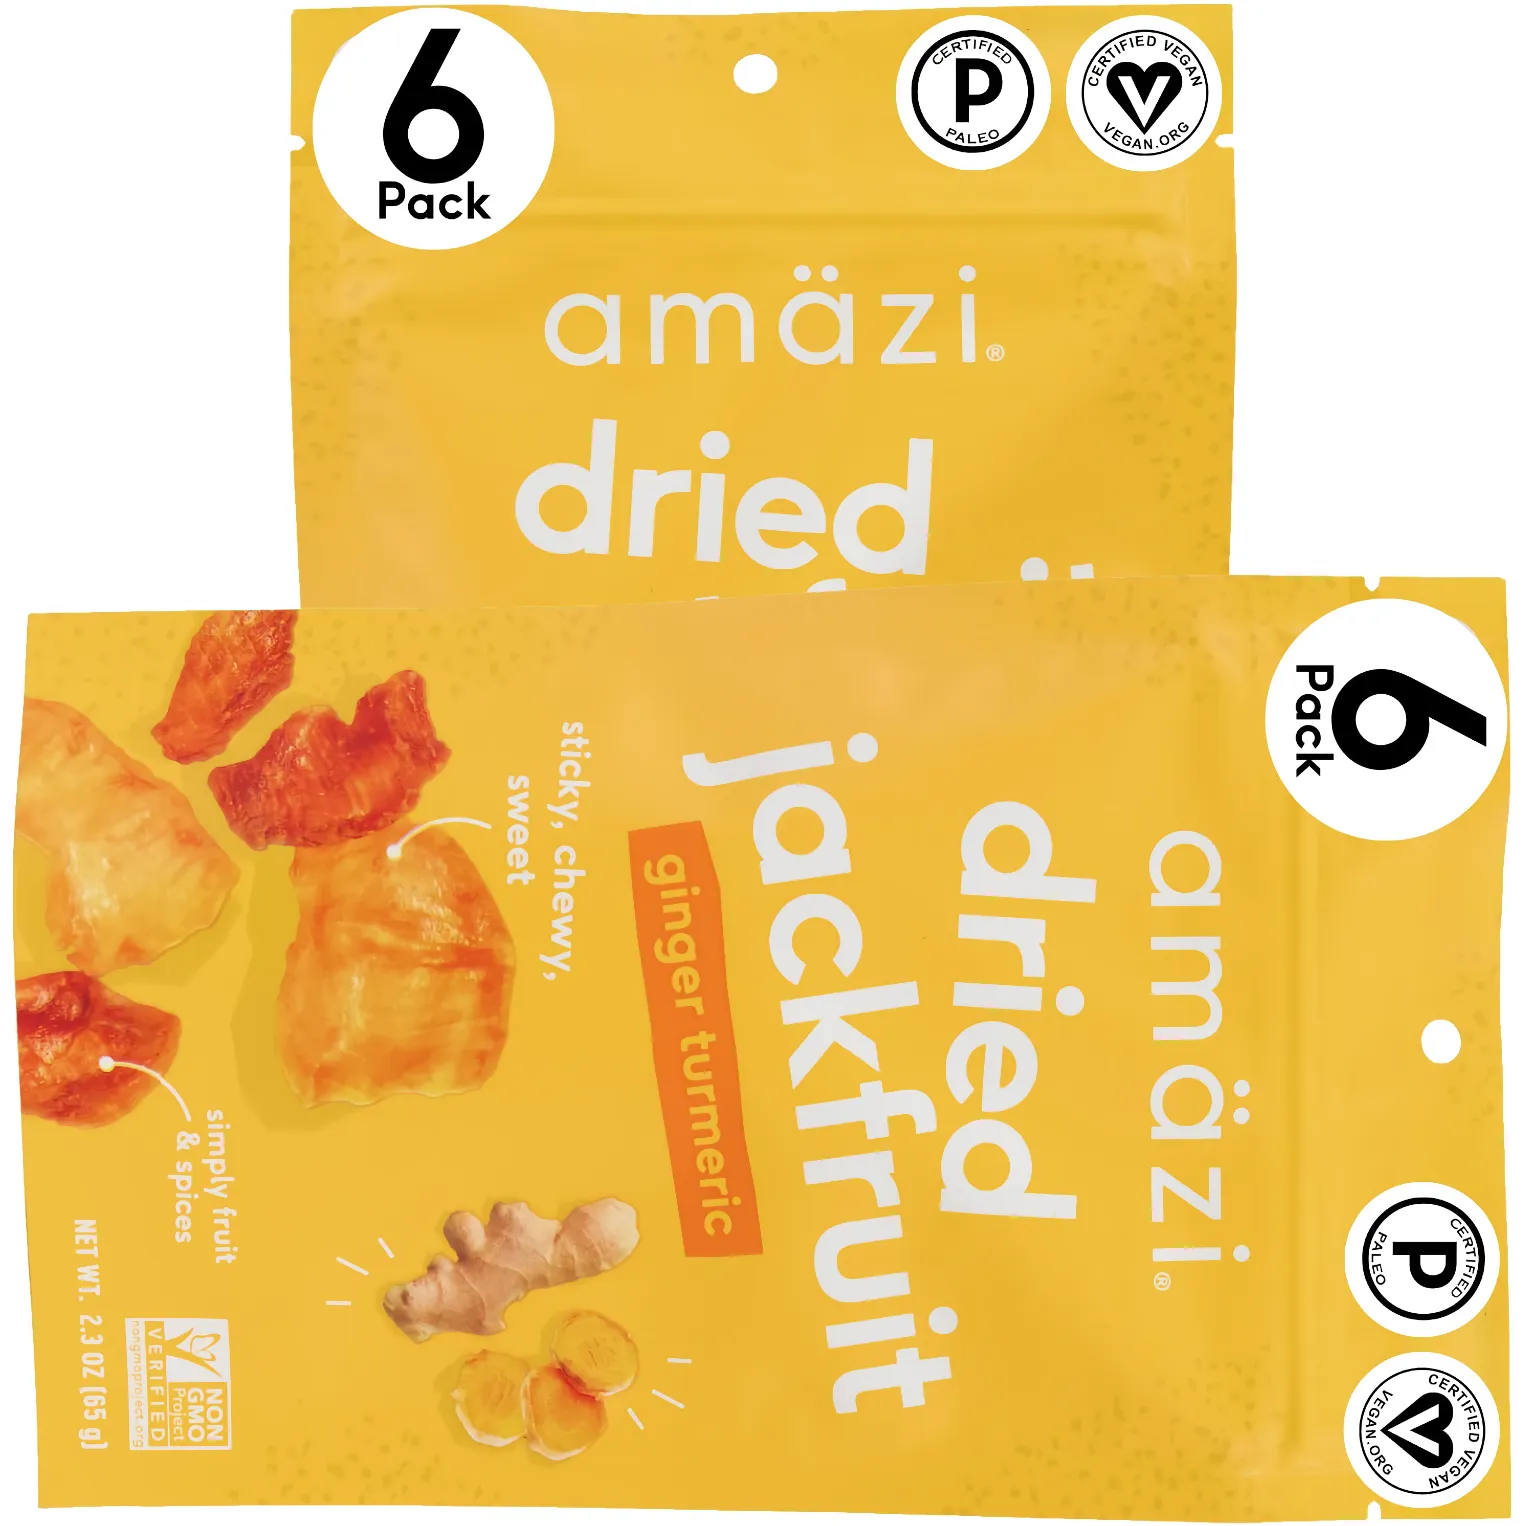 Free Amazi Dried Fruit Snacks After Rebate